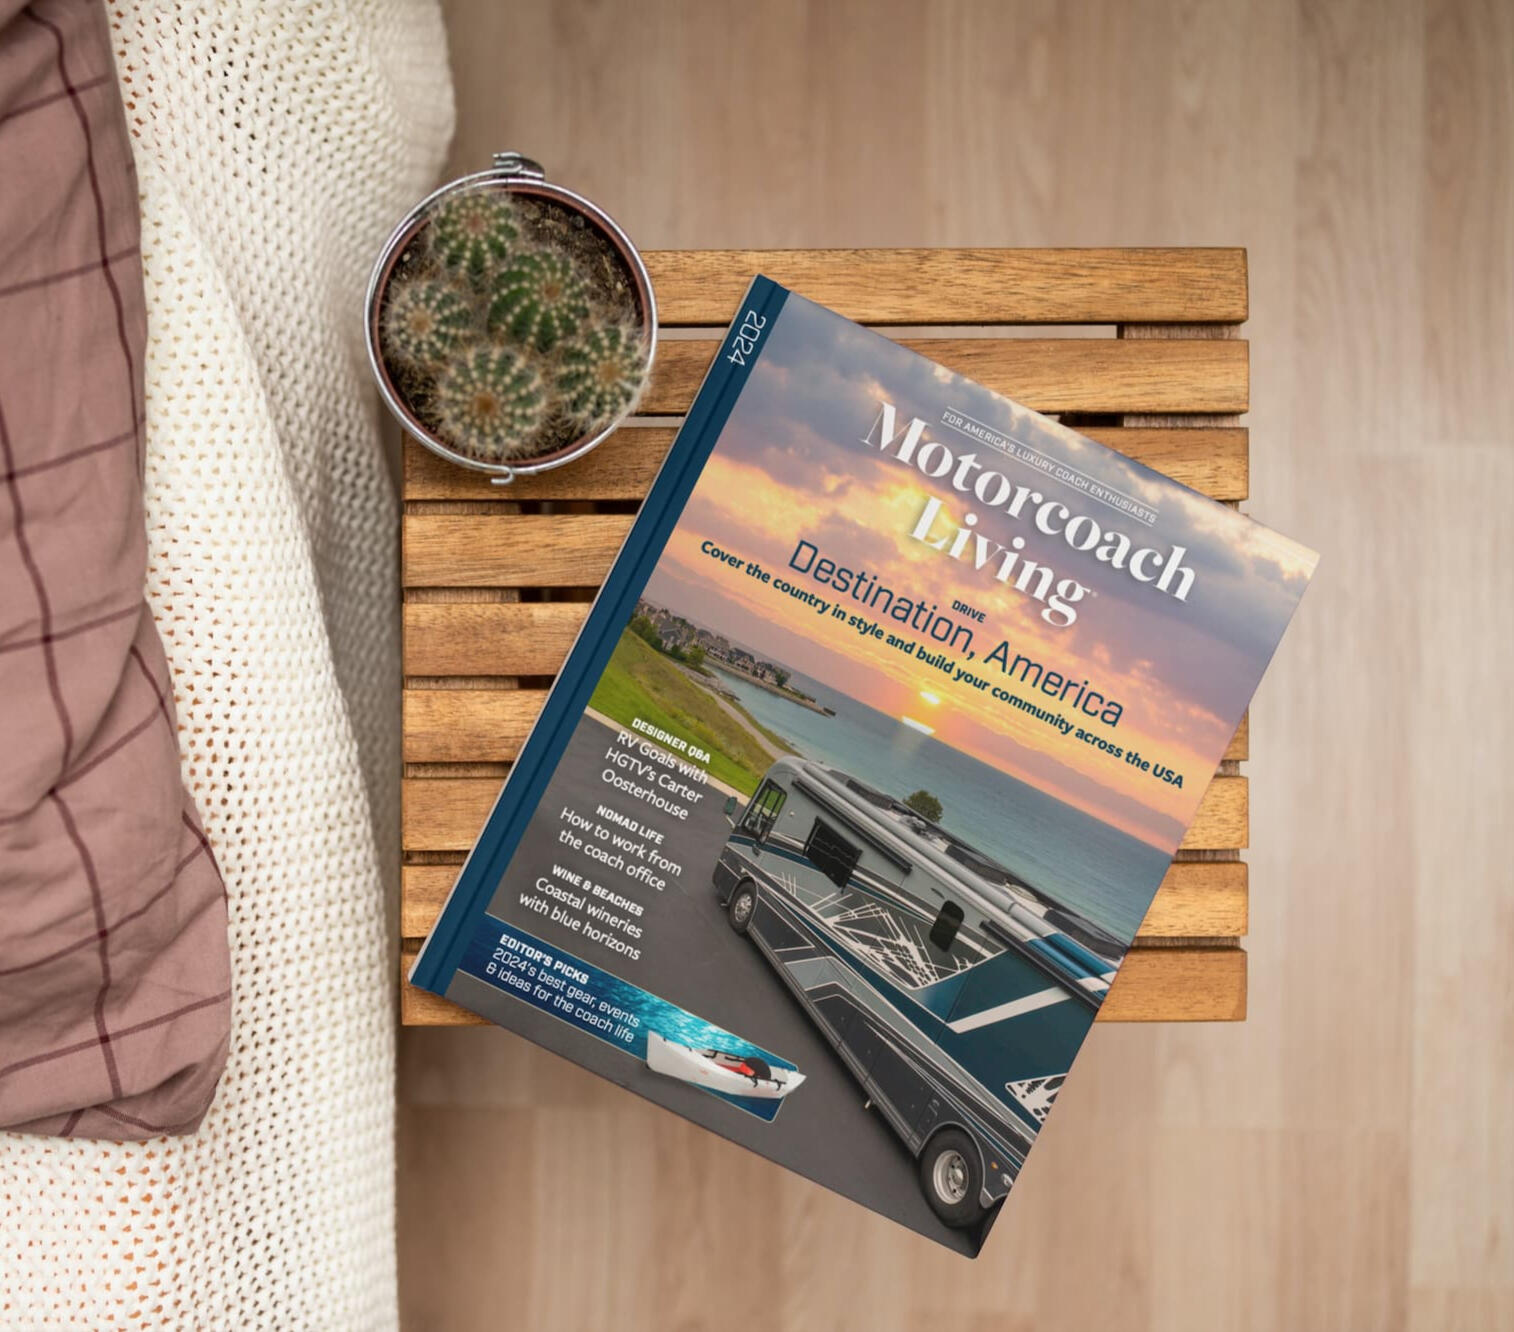 Motorcoach Living Magazine